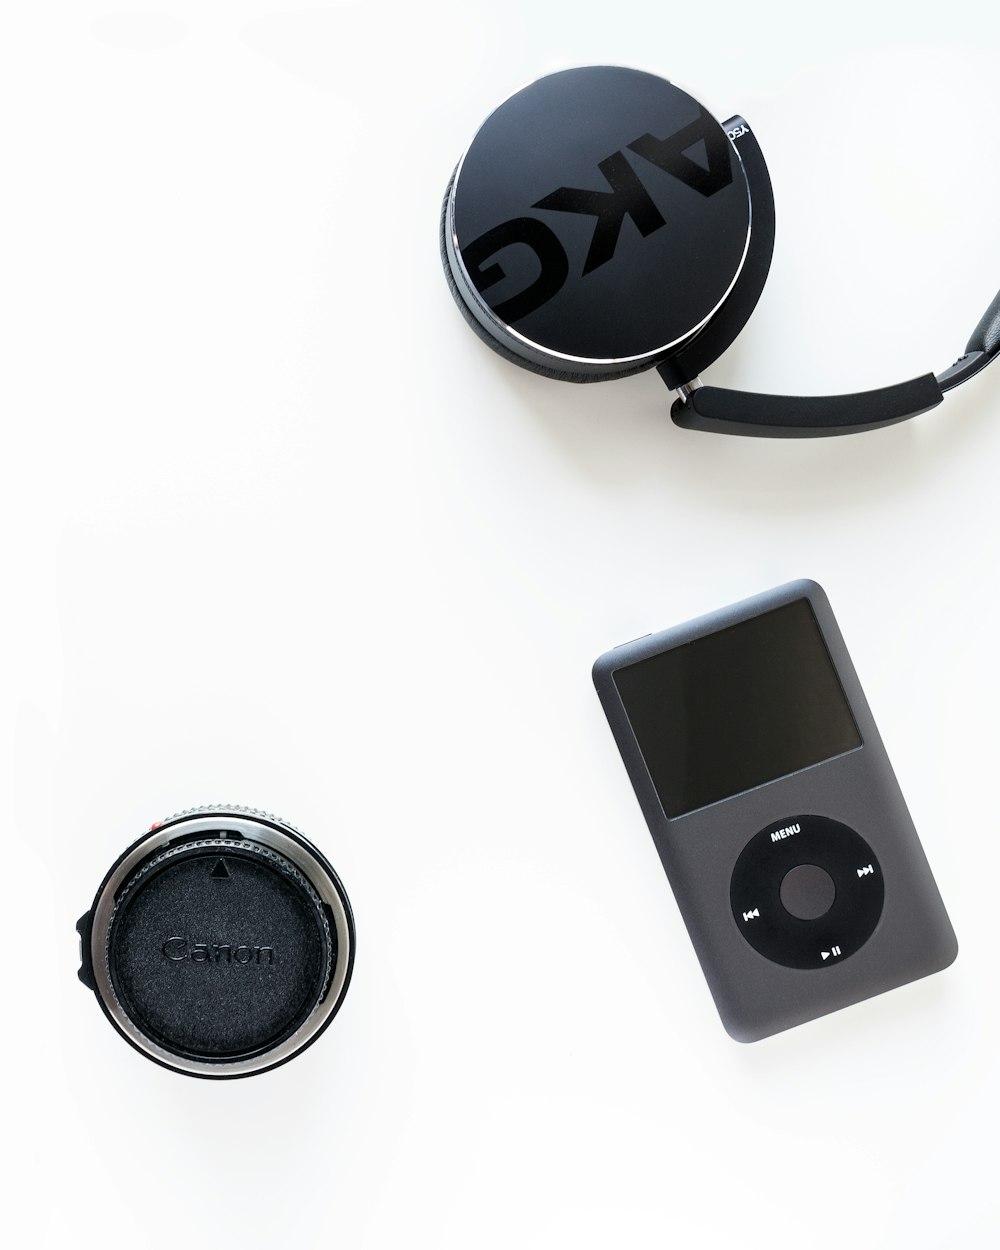 iPod classic preto ao lado da lente preta da câmera Canon